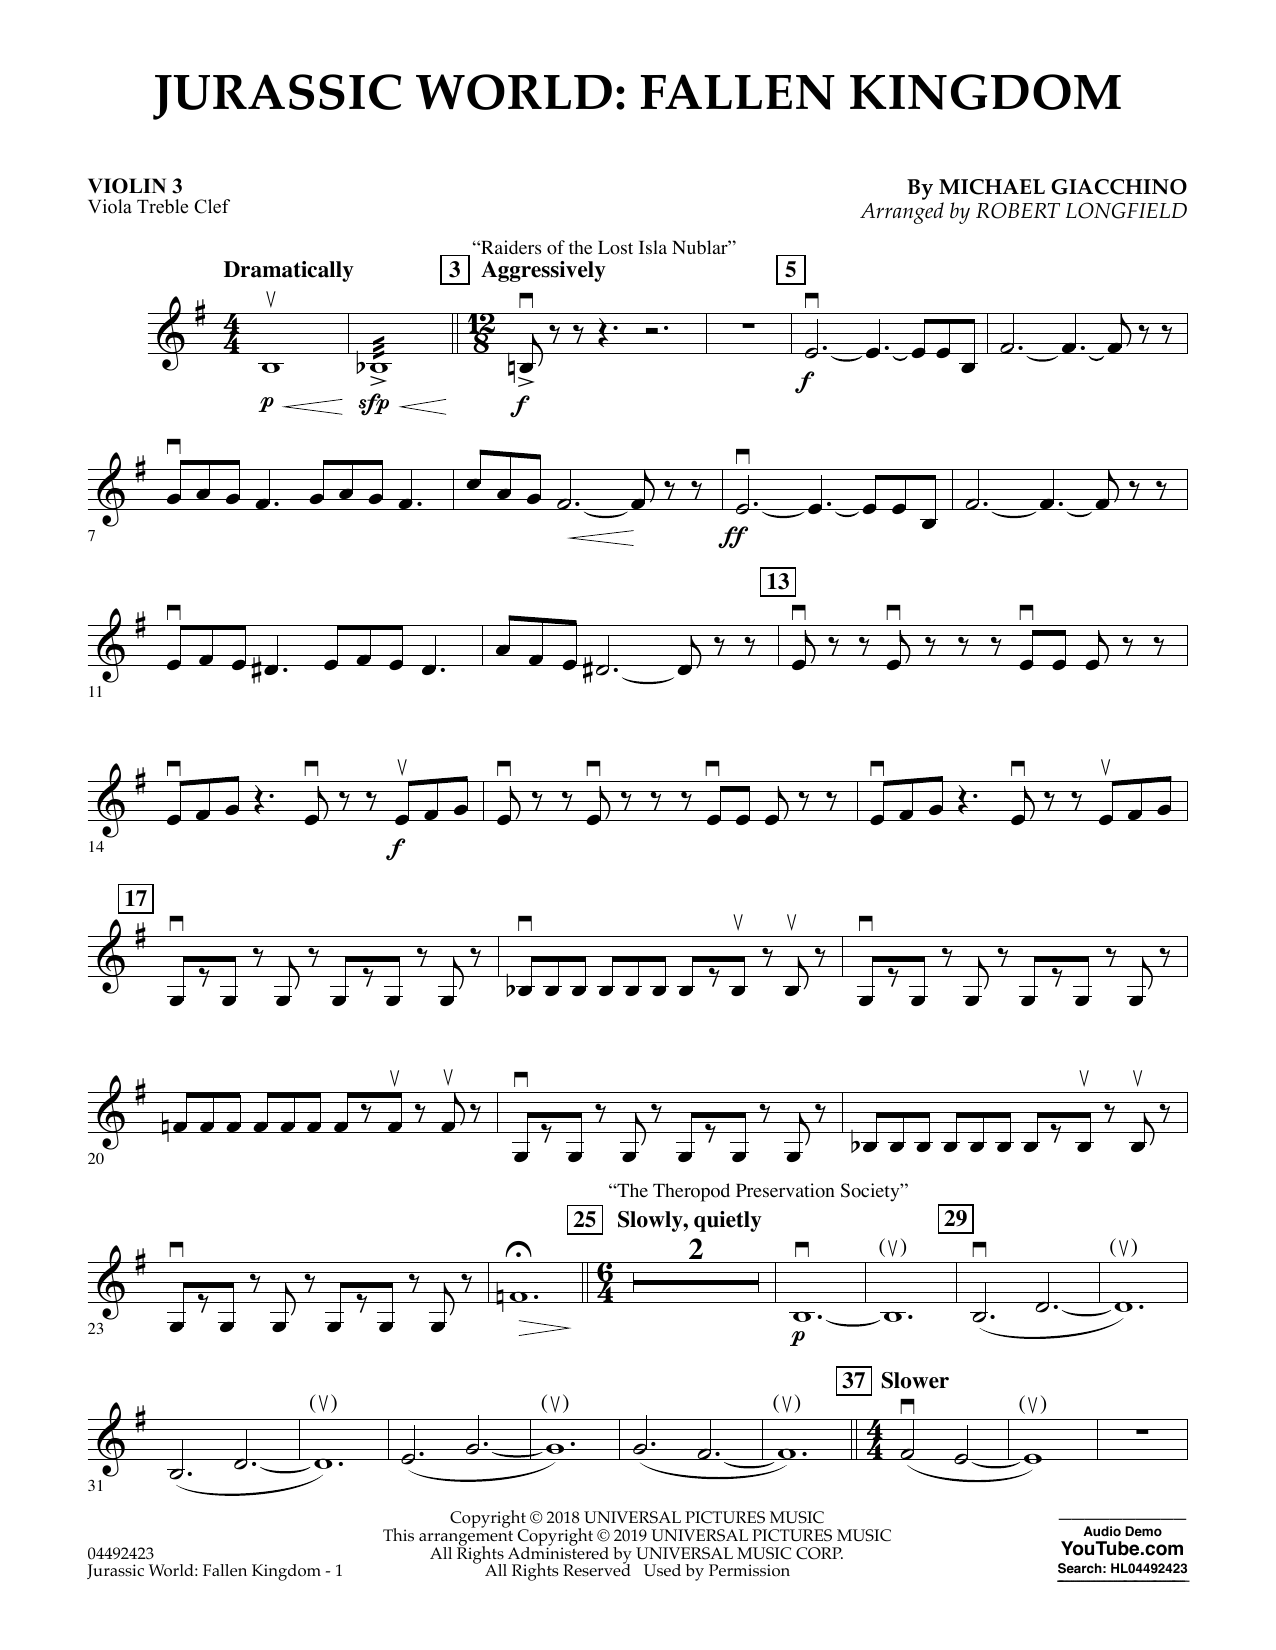 Michael Giacchino Jurassic World: Fallen Kingdom (arr. Robert Longfield) - Violin 3 (Viola Treble Clef) Sheet Music Notes & Chords for Orchestra - Download or Print PDF